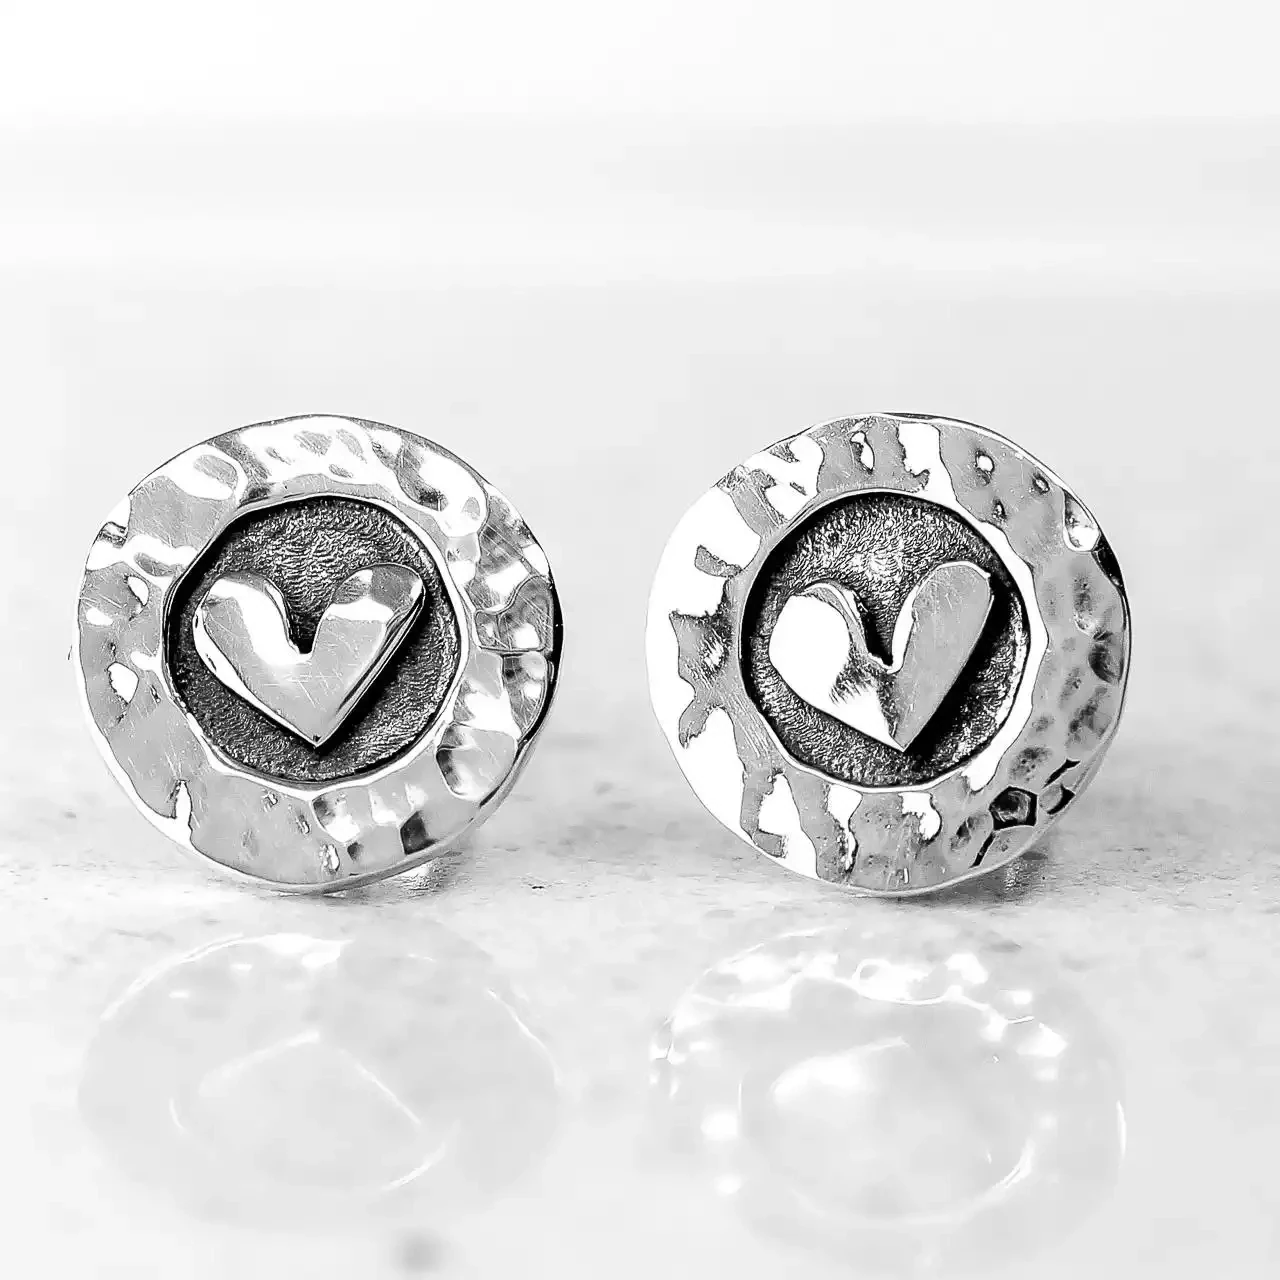 Petite Heart Silver Stud Earrings by Linda Macdonald